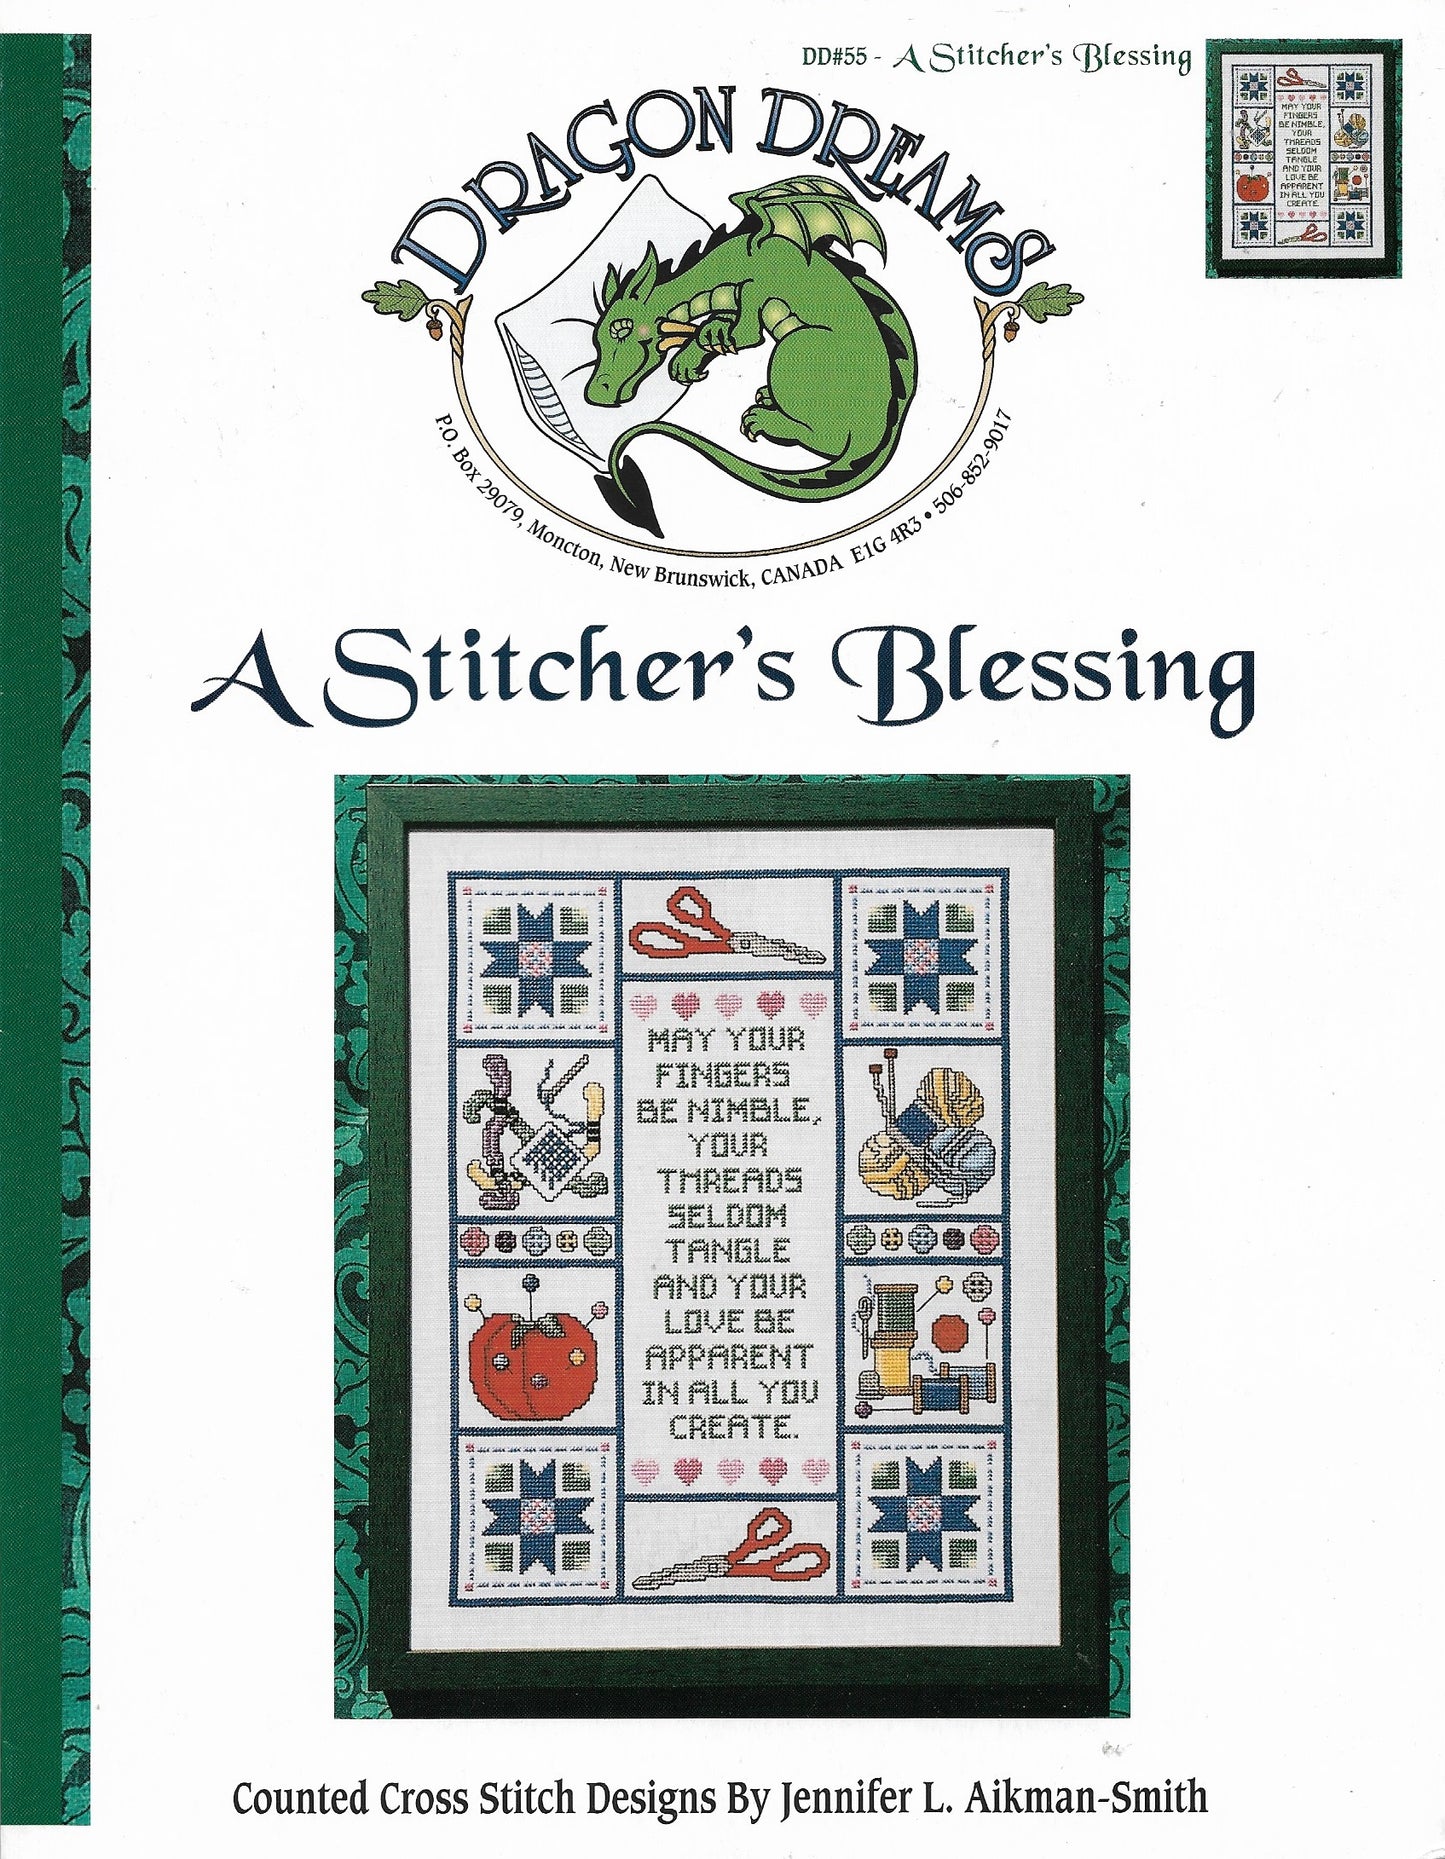 Dragon Dreams A Stitcher's Blessing DD55 cross stitch pattern